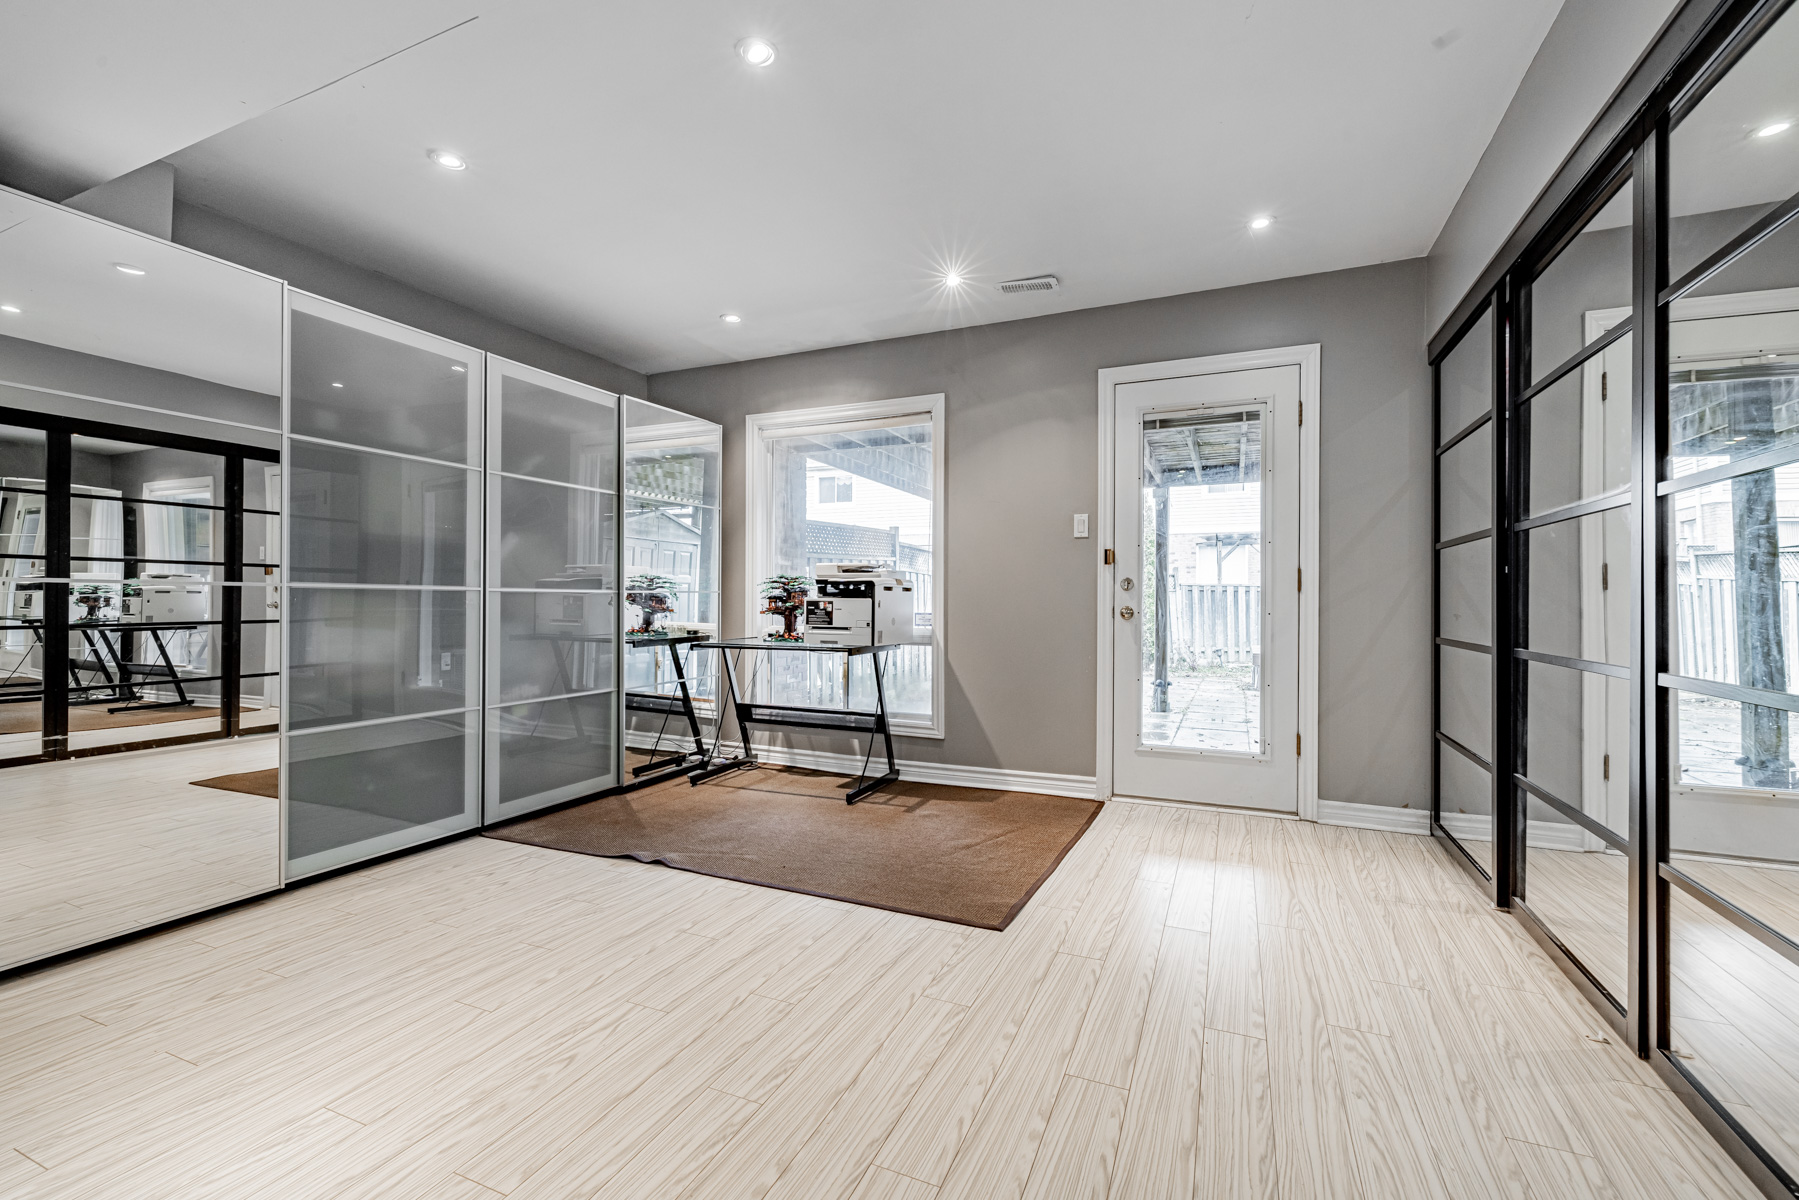 Basement with built-in shelves, laminate floors, large window, sliding glass doors and pot-lights.